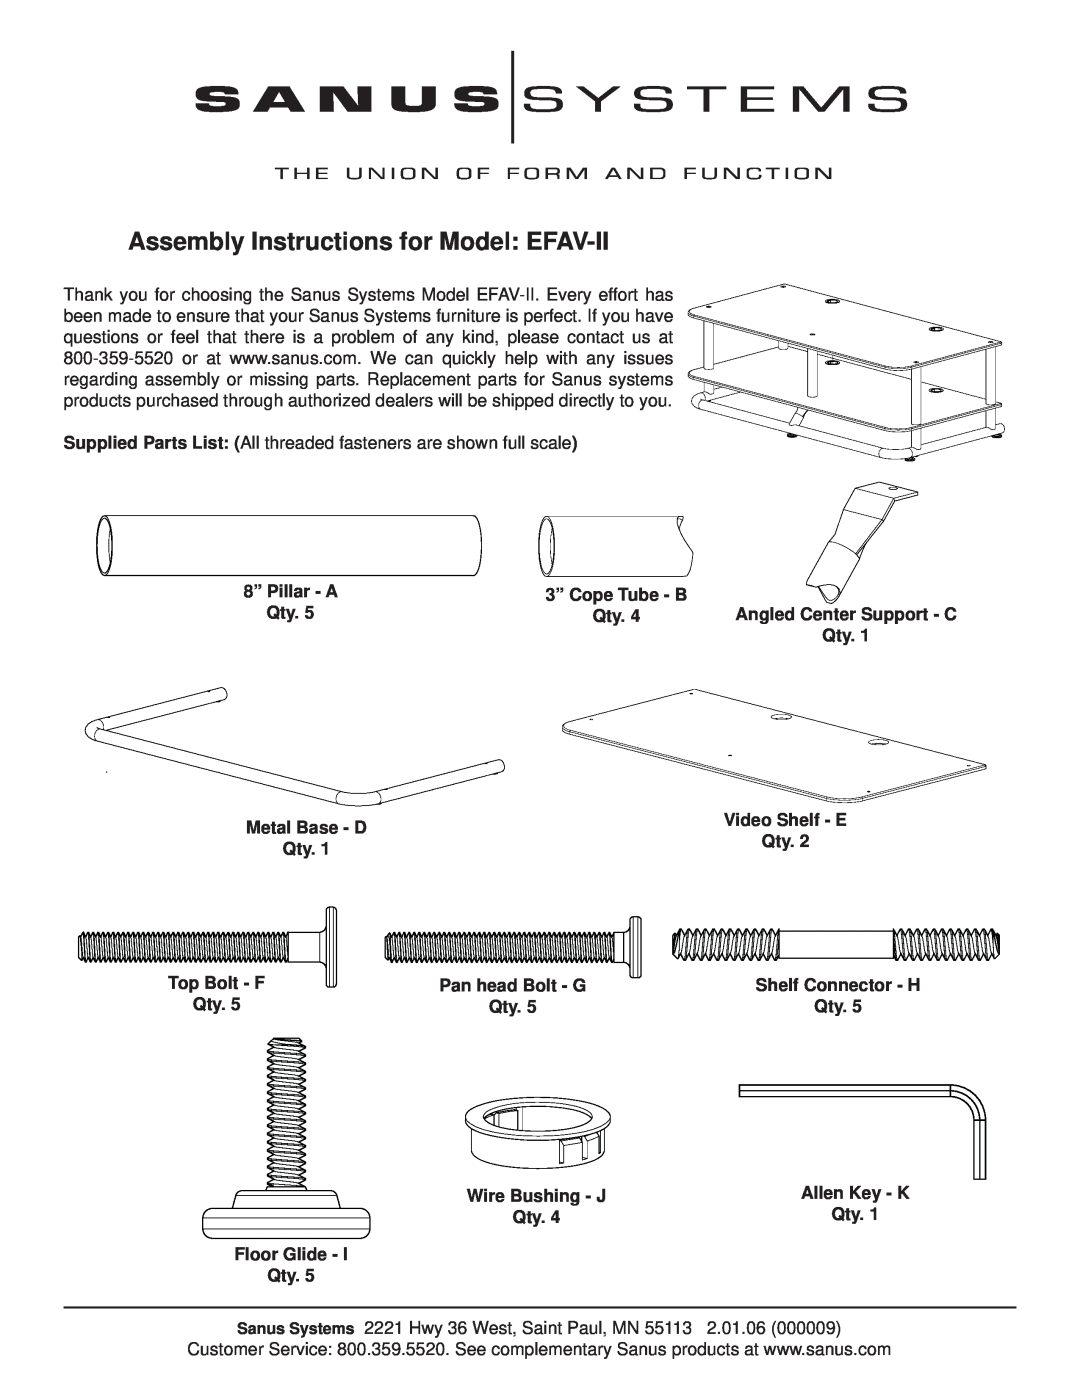 Sanus Systems manual Assembly Instructions for Model EFAV-II, 8” Pillar - A Qty. Metal Base - D Qty 